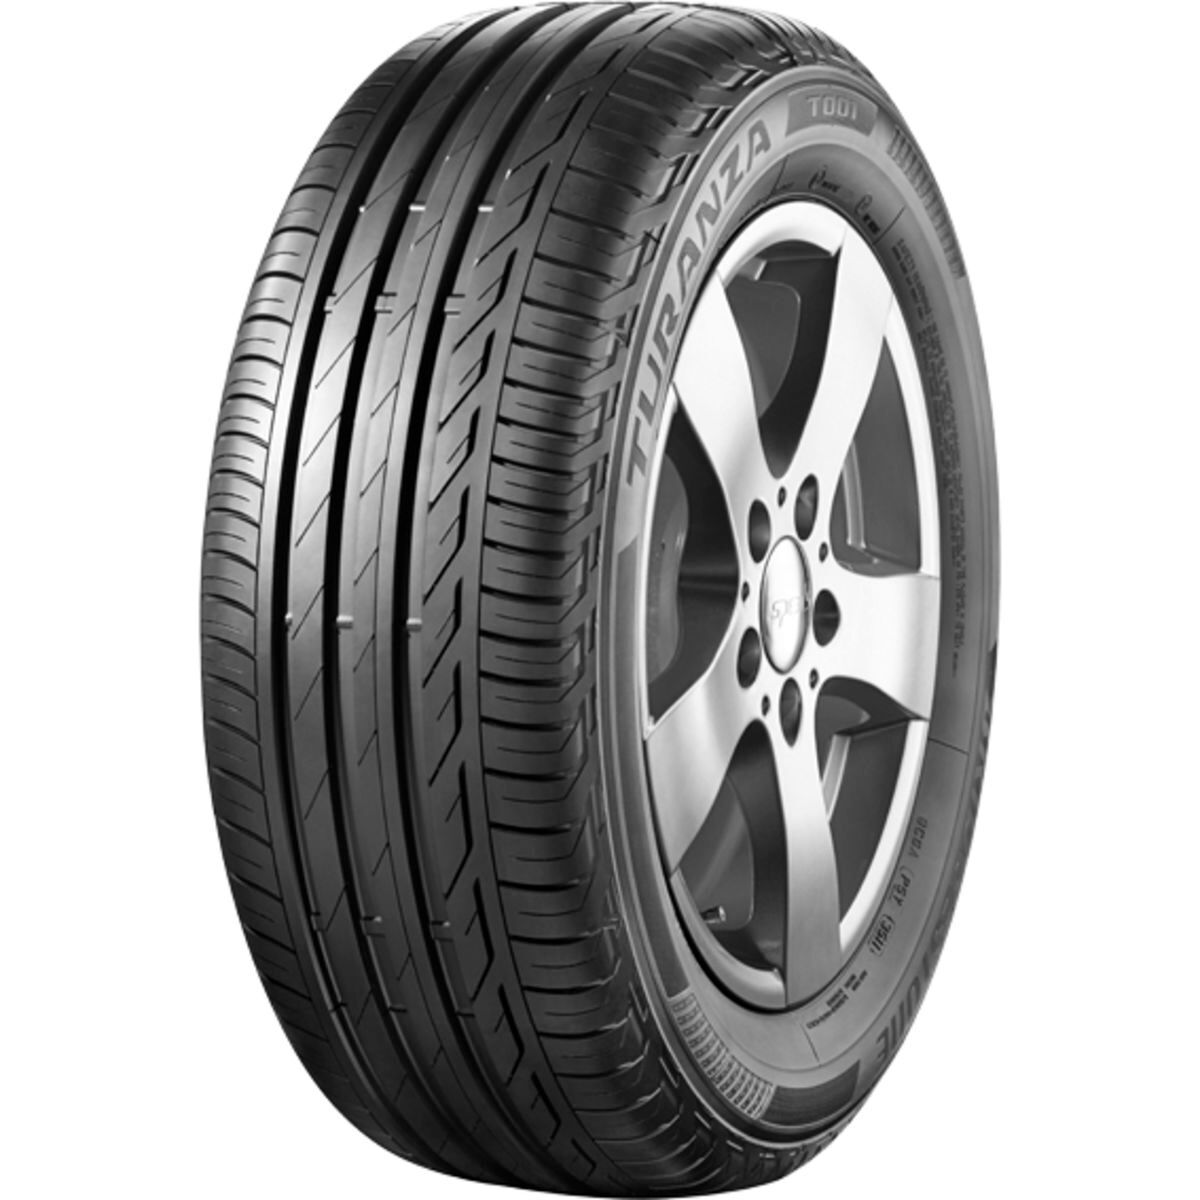 Neumáticos de verano BRIDGESTONE Turanza T001 225/60R16 98V